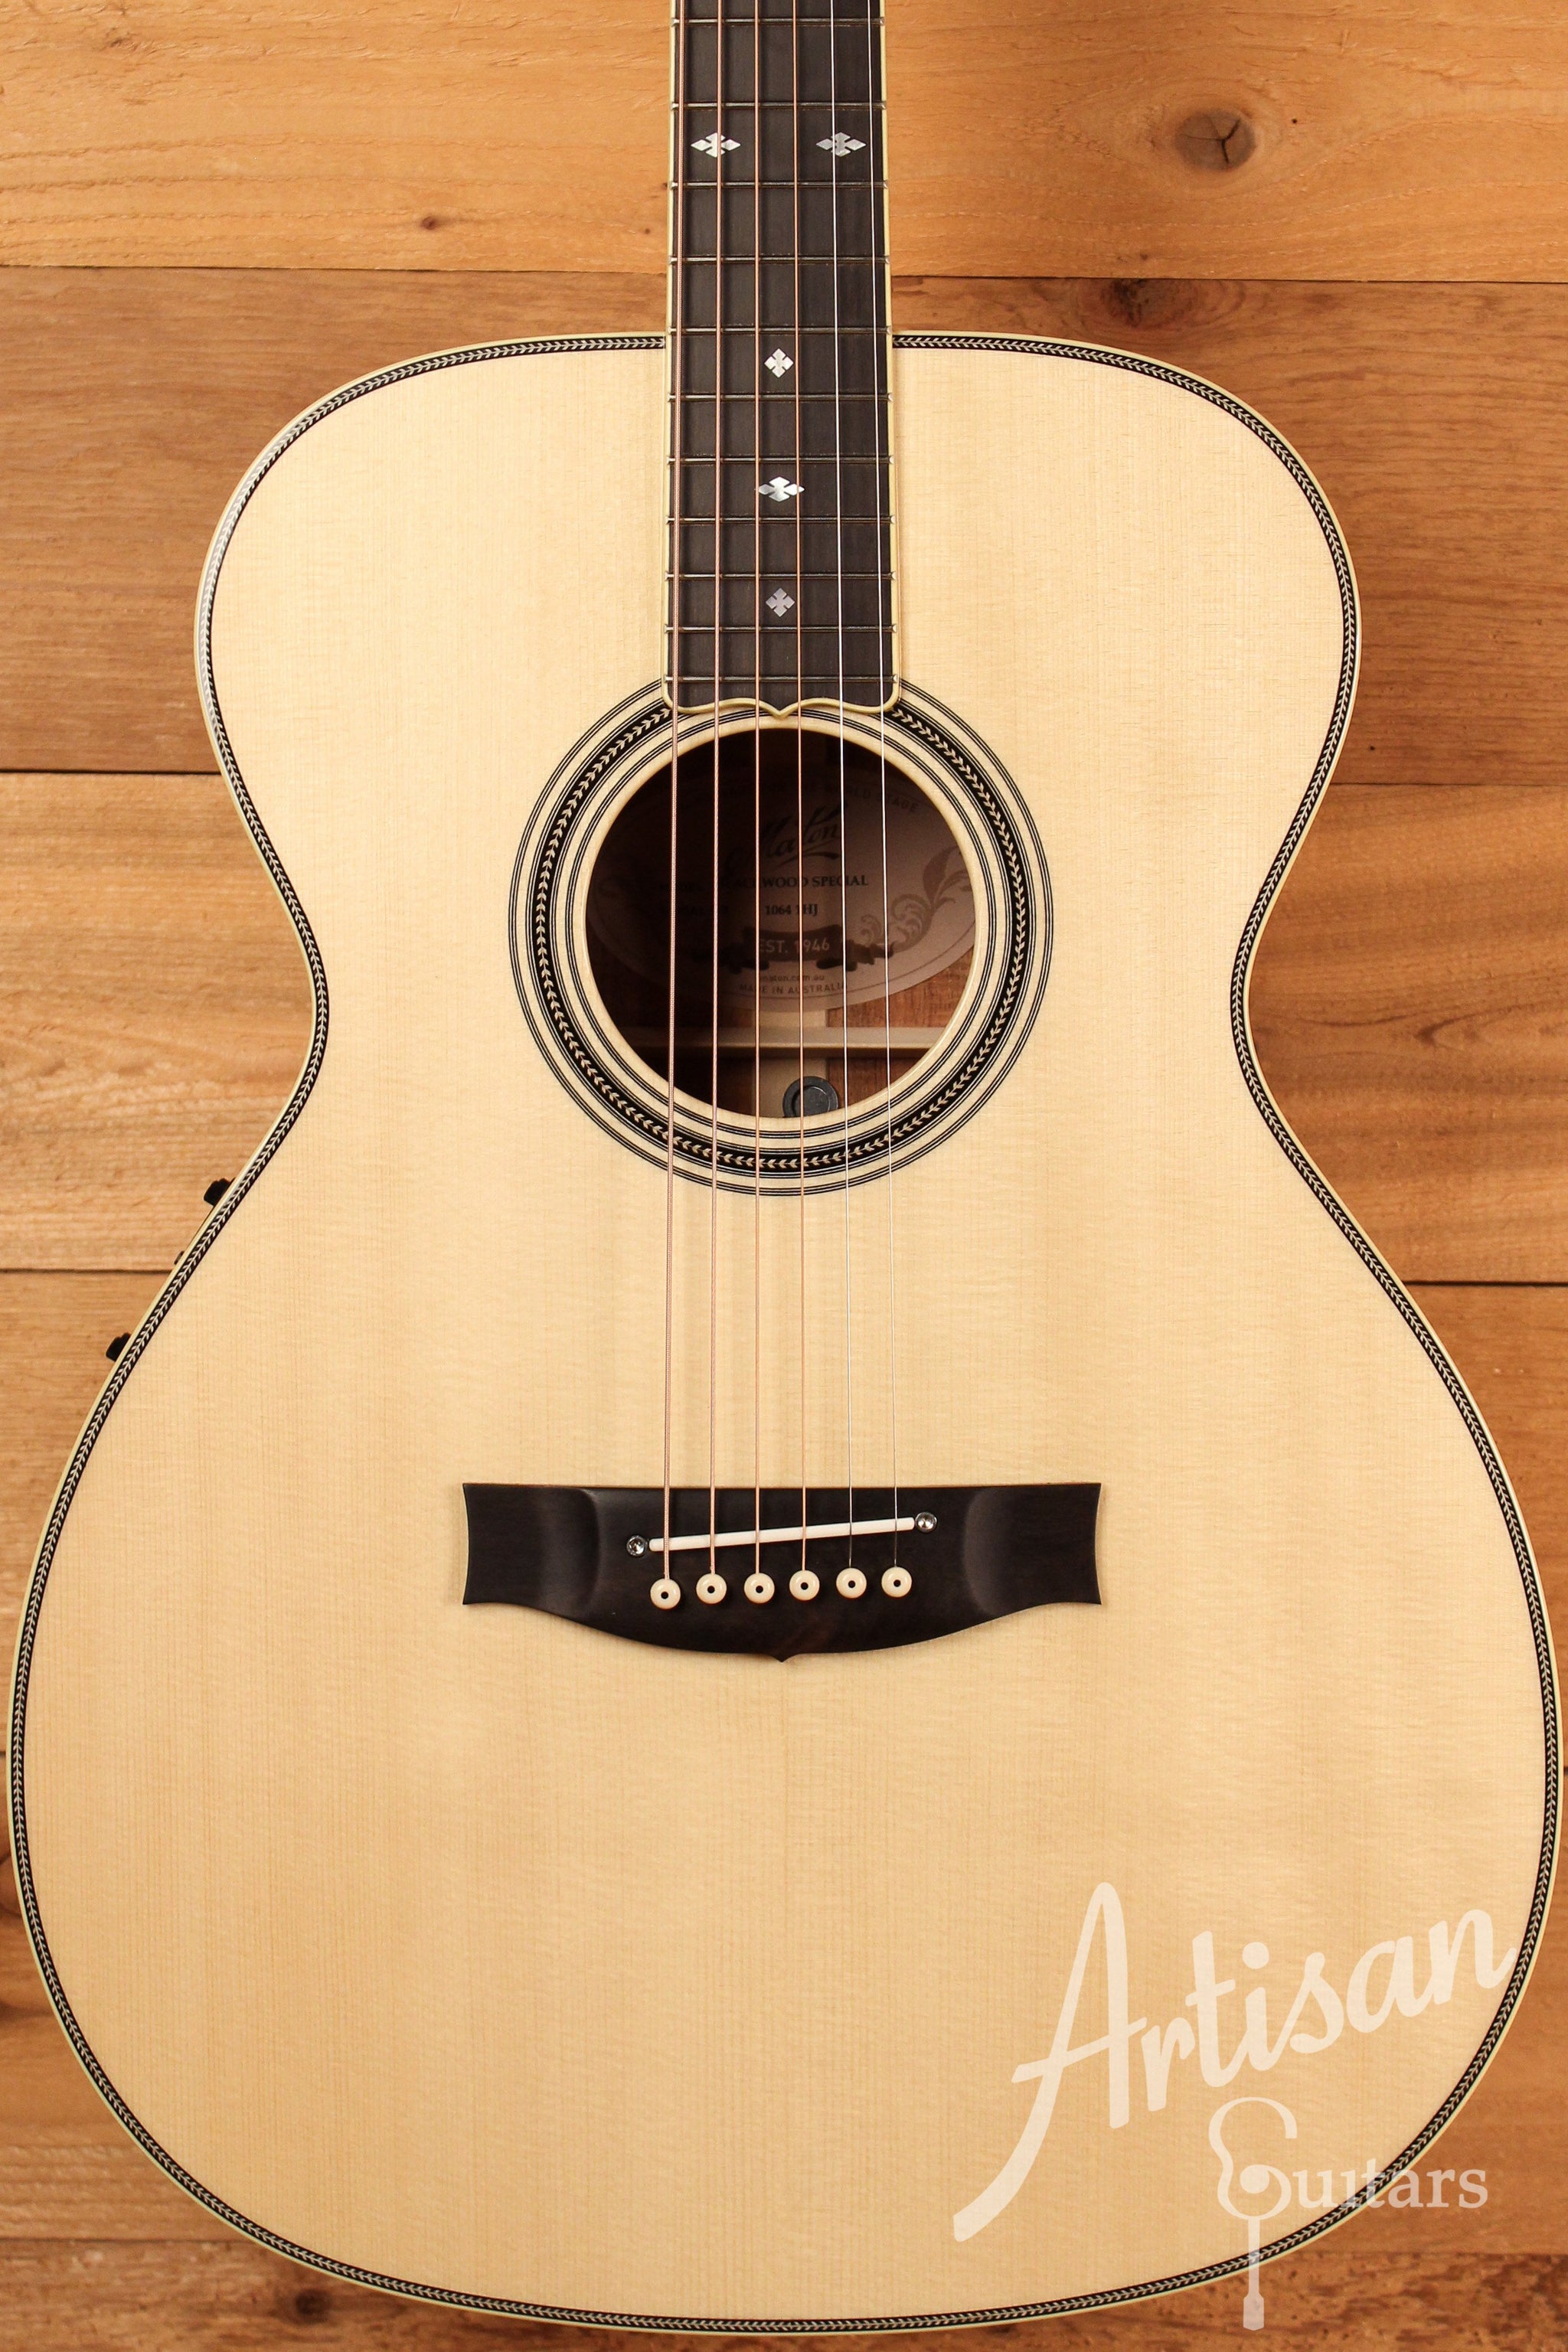 Maton Custom Shop Classic Blackwood Special Guitar with European Spruce & Figured Blackwood  ID-12820 - Artisan Guitars